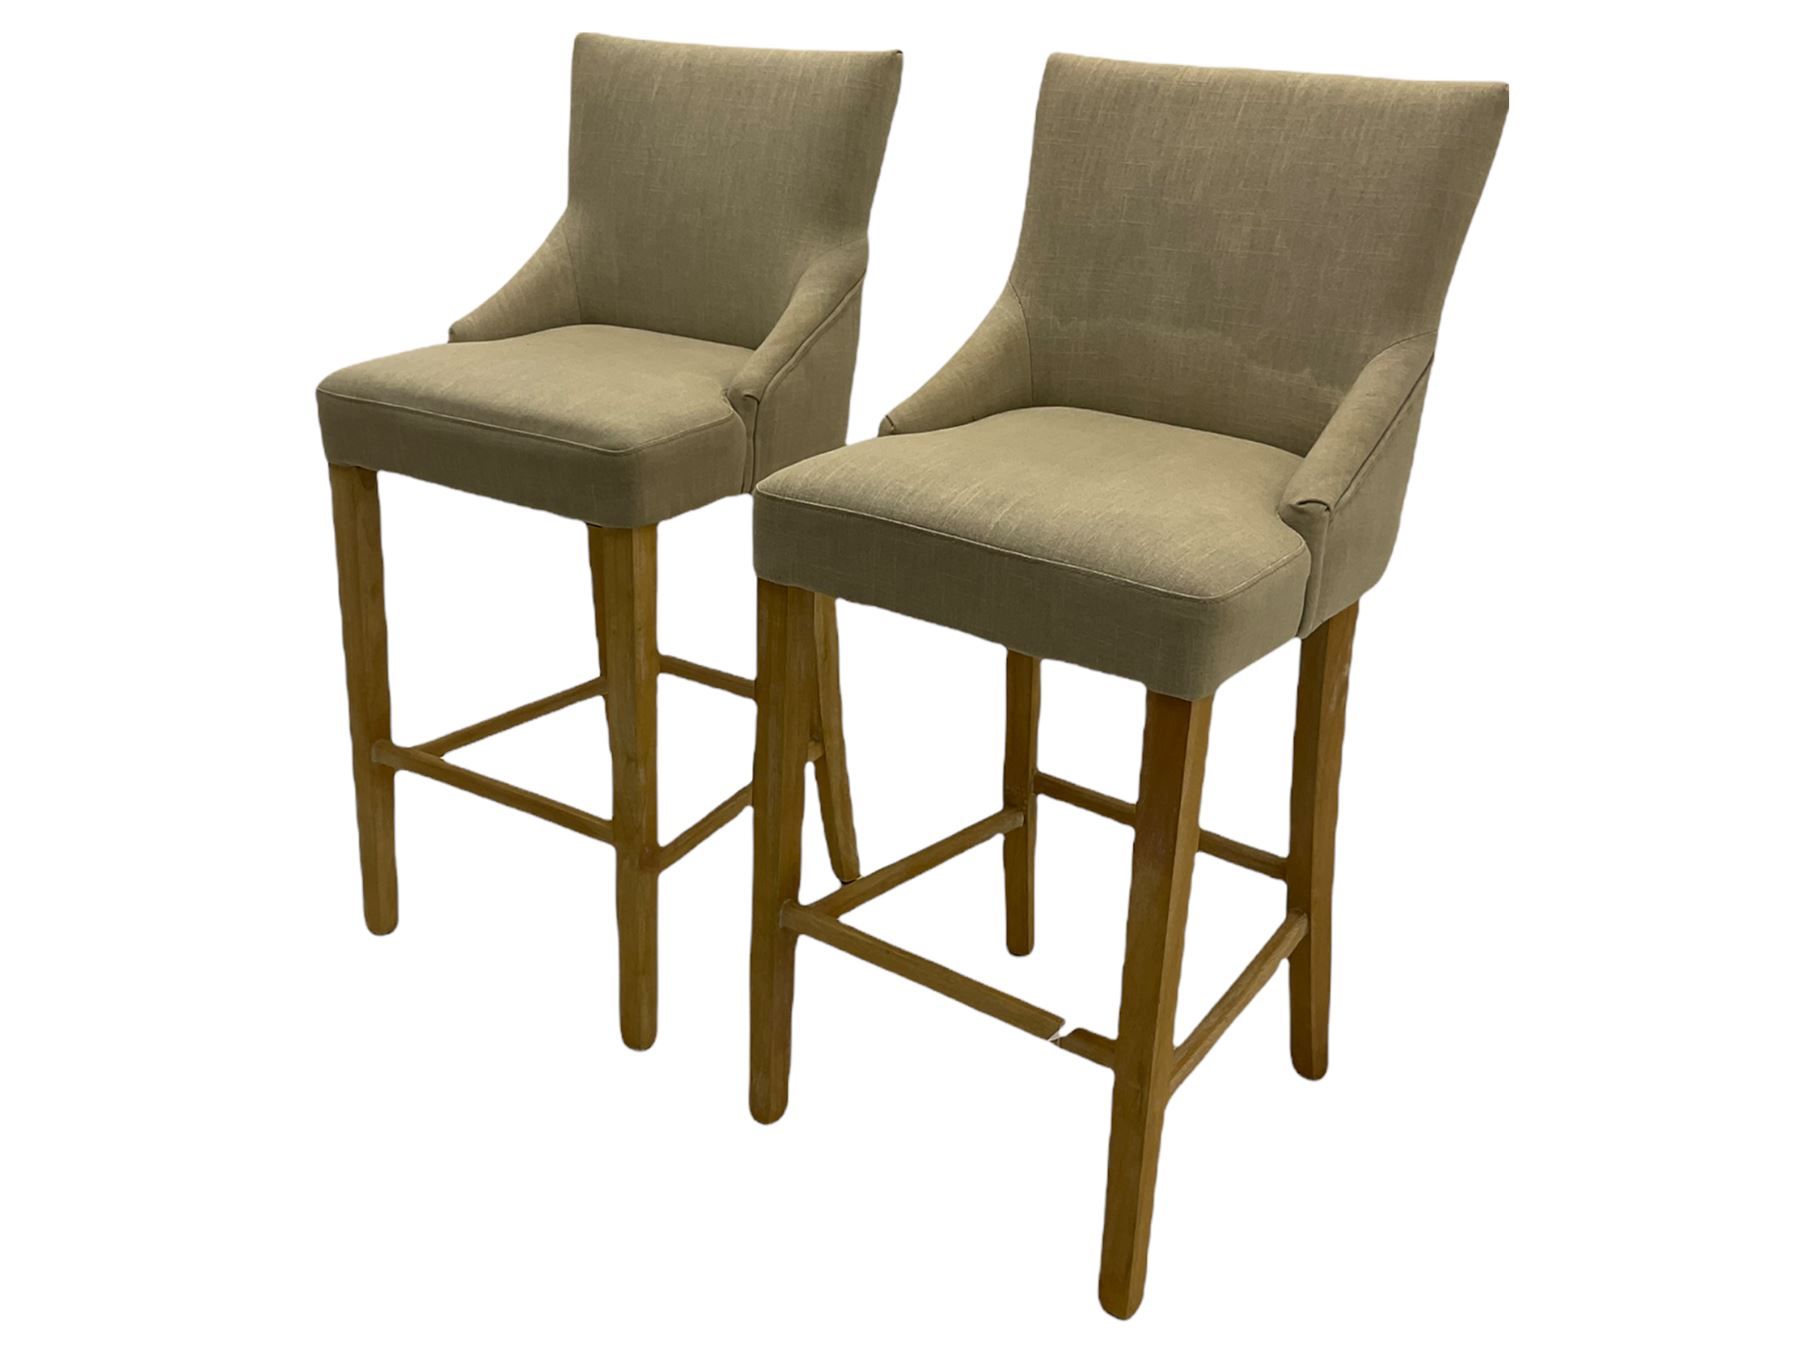 Pair of light oak bar stools - Image 9 of 12